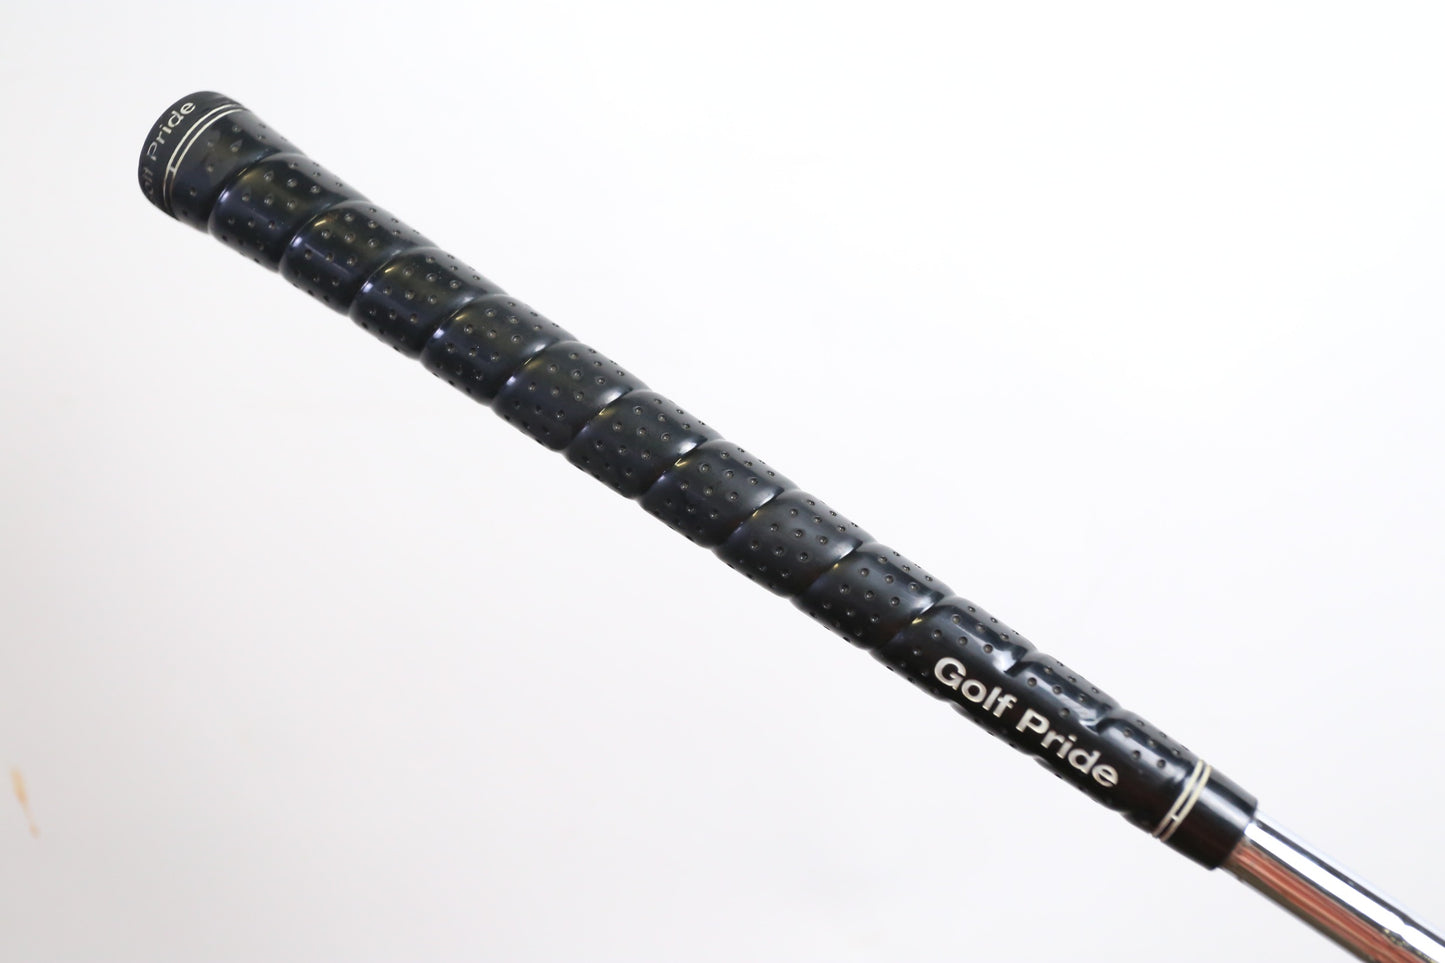 Used Titleist Vokey Black Nickel 200 Series Sand Wedge - Right-Handed - 56 Degrees - Stiff Flex